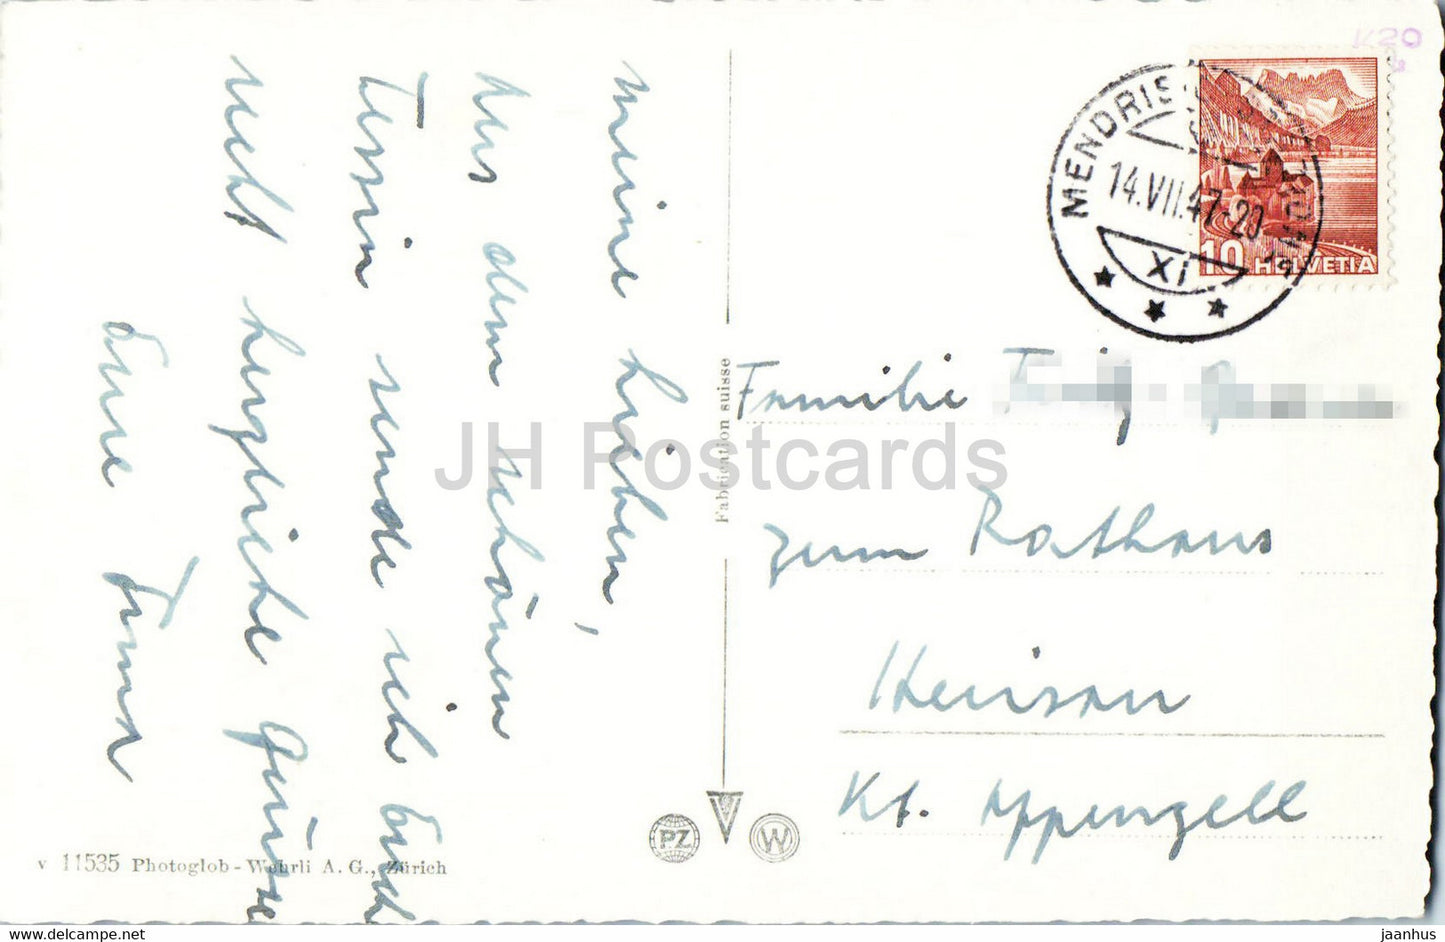 Lago di Lugano - San Salvatore - Boot - 11535 - 1947 - alte Postkarte - Schweiz - gebraucht